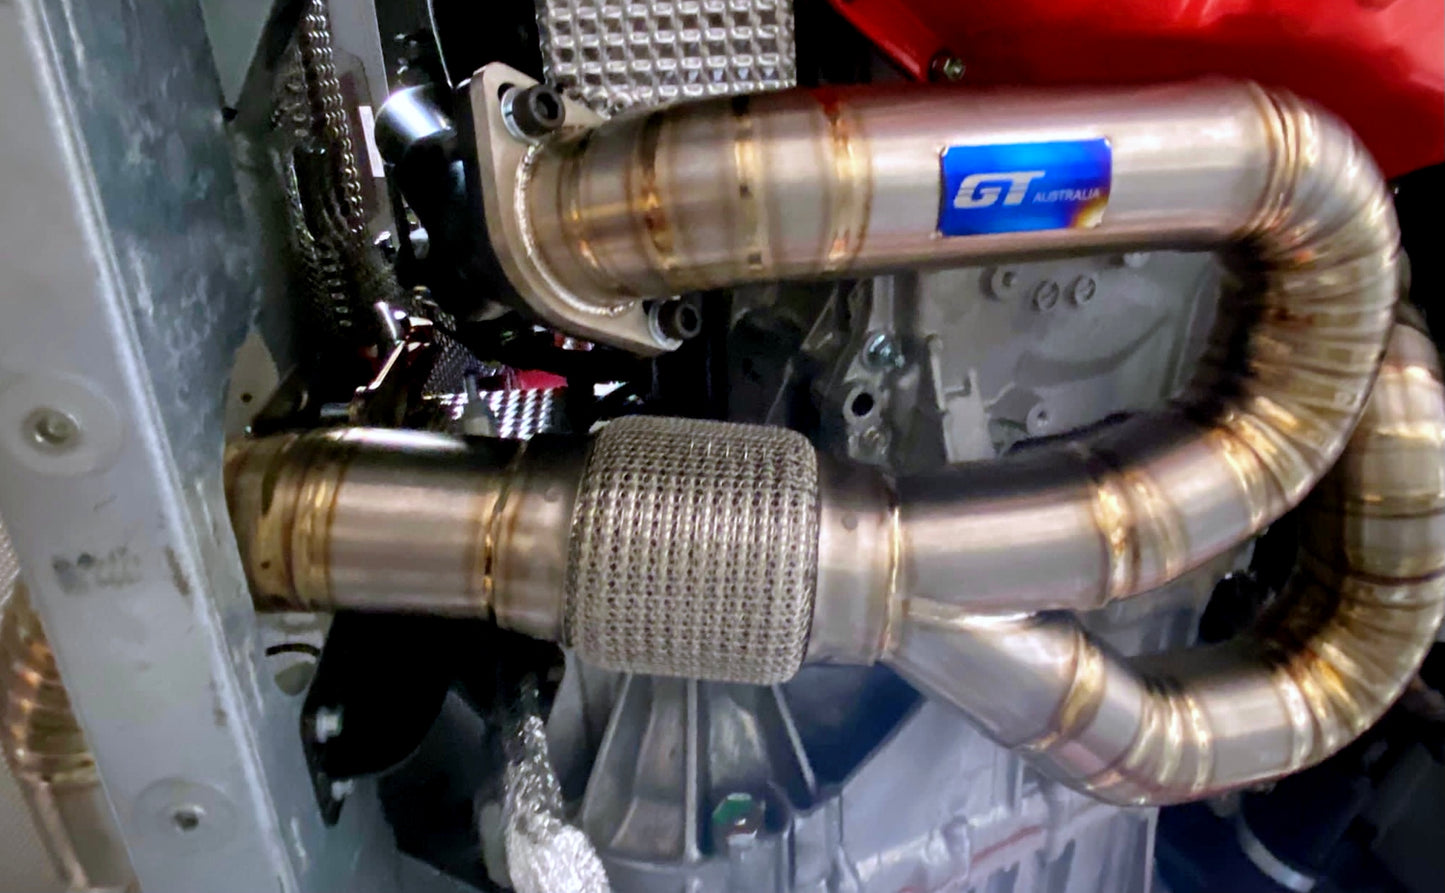 Lotus Exige CUP430 titanium y-pipe by GT Australia